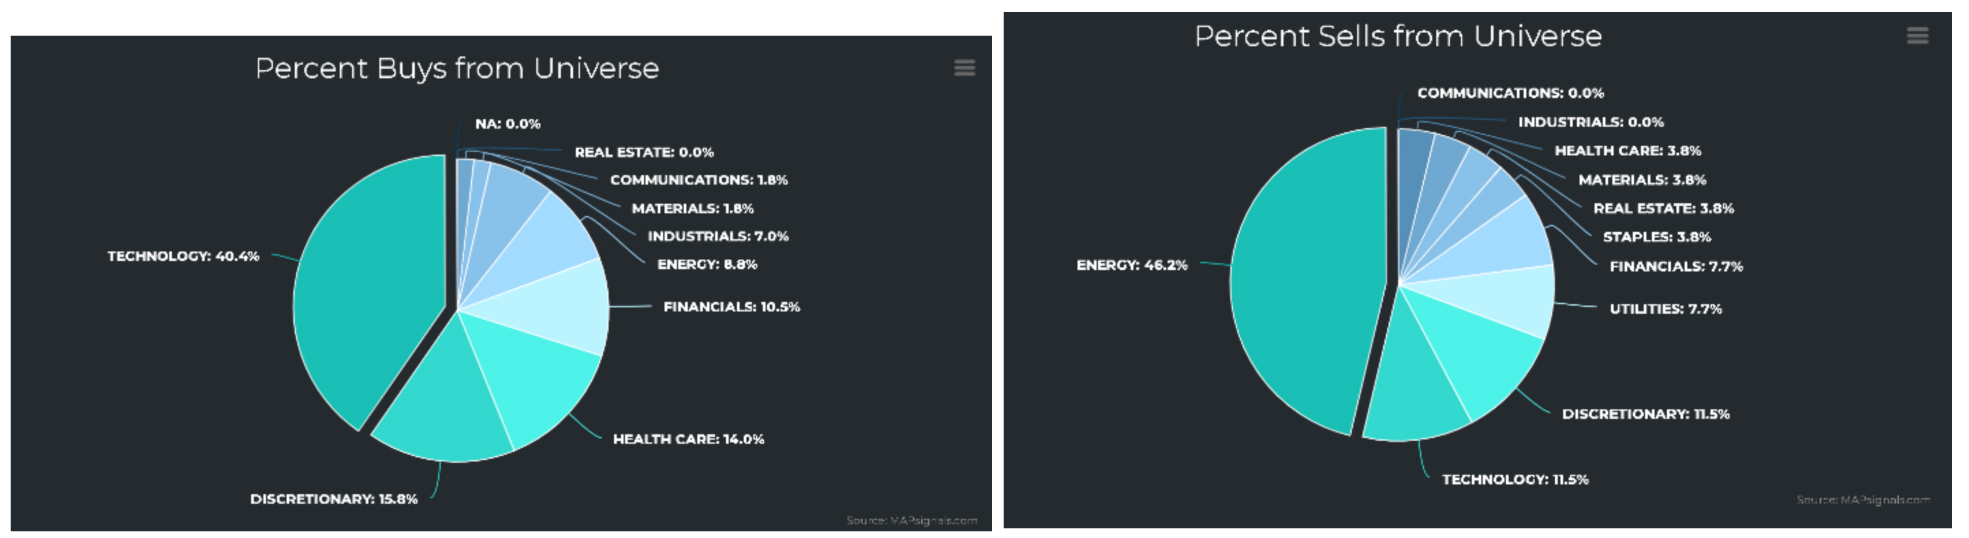 Percent-Buys-Pie-Charts-2